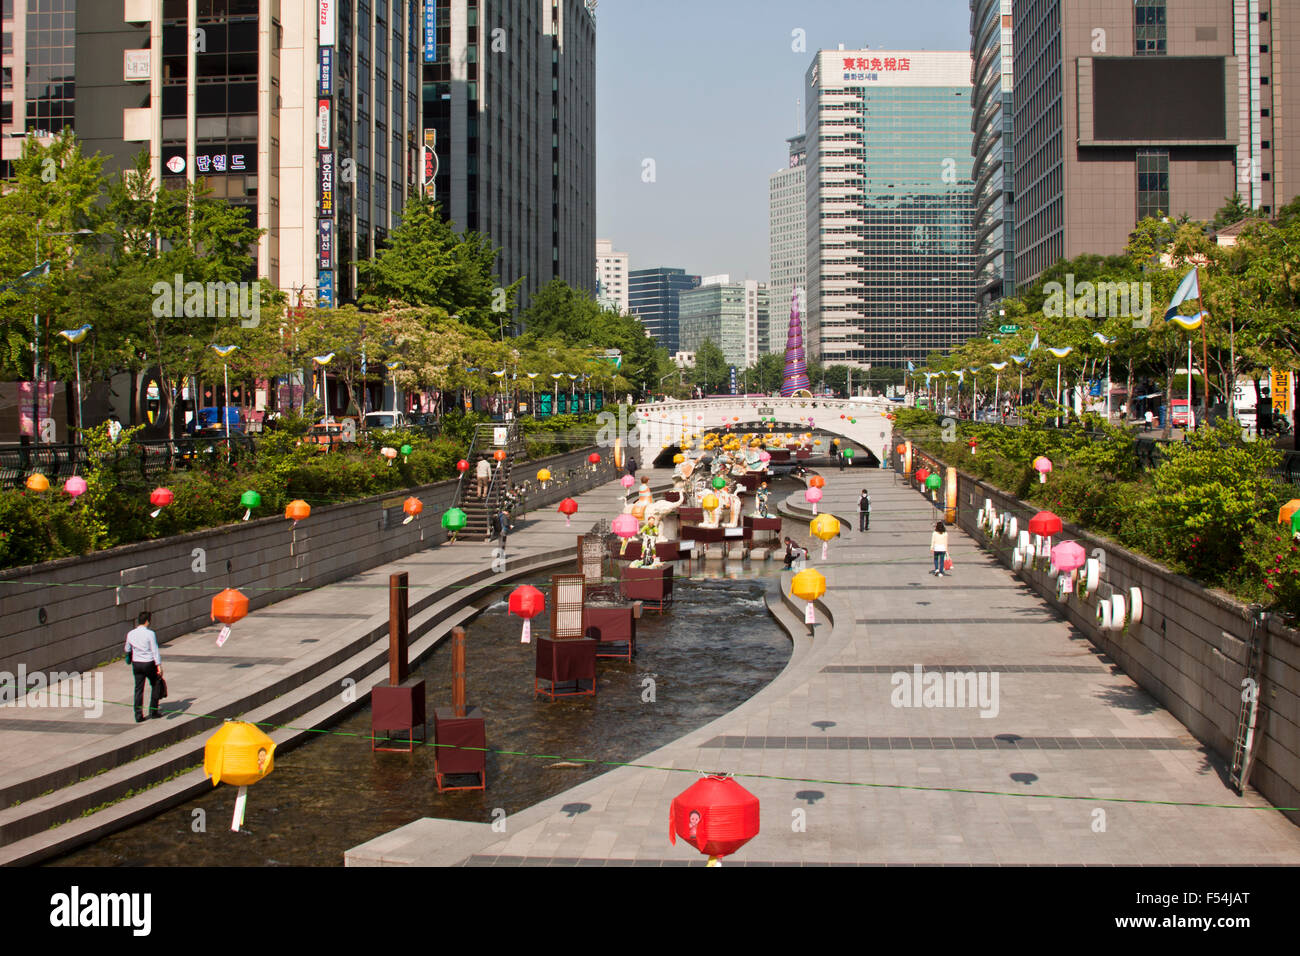 Seoul, Korea- May 22, 2015: Cheonggyecheon Stream, Seoul, South Korea on May 22, 2015 - Cheonggyecheon is an 11 km long modern s Stock Photo